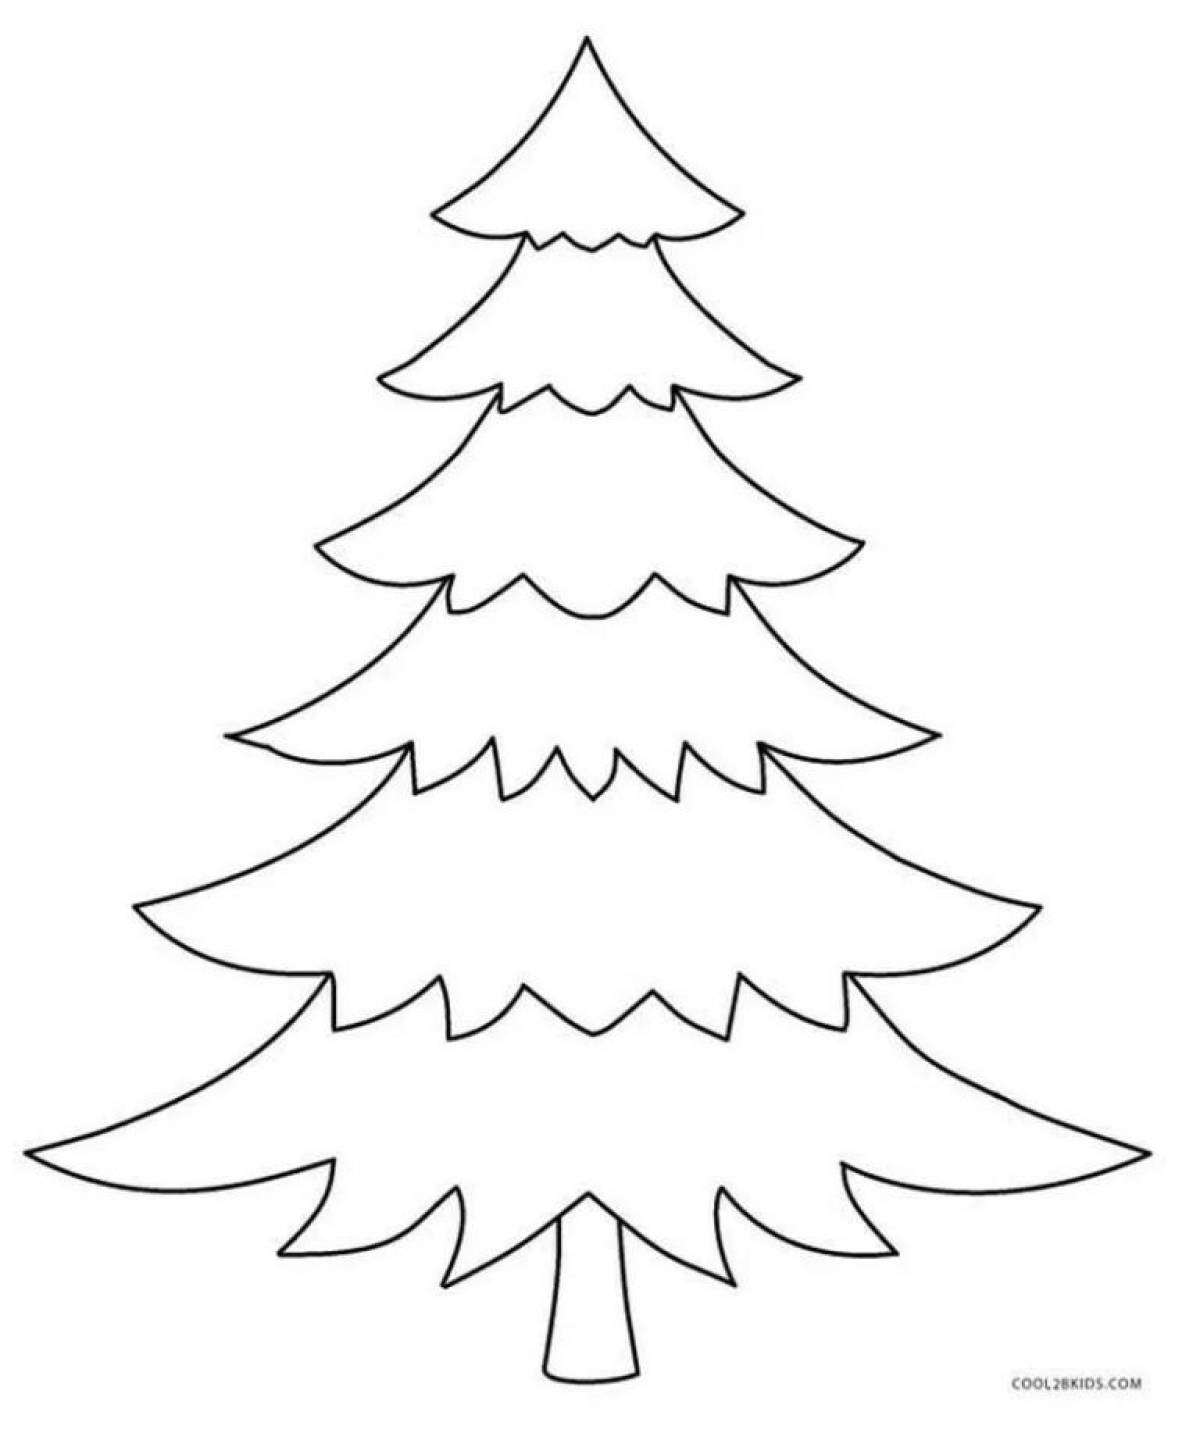 Splendorous coloring page шаблон рождественской елки